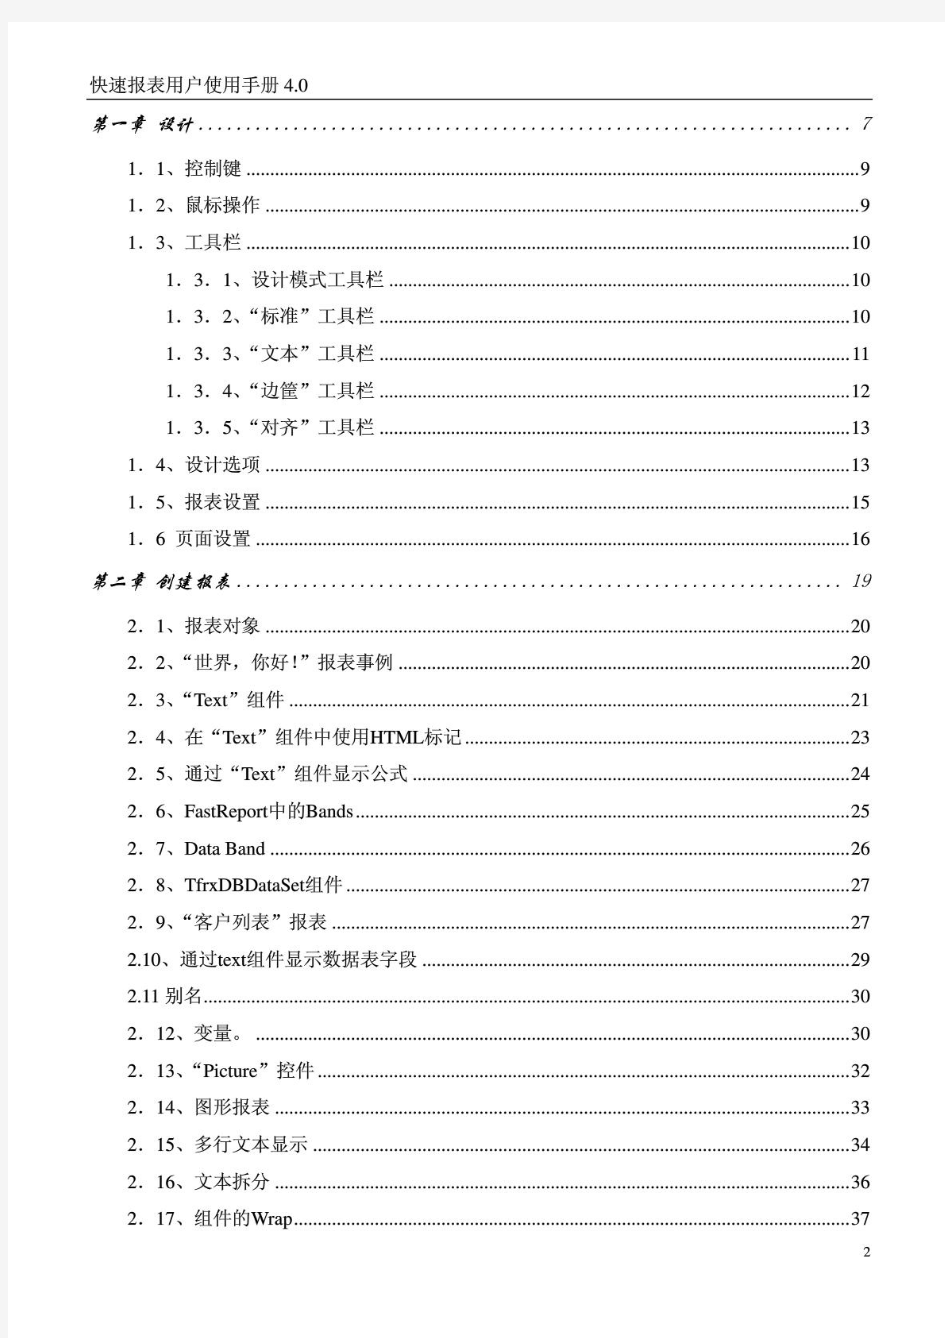 FastReport4中文使用手册